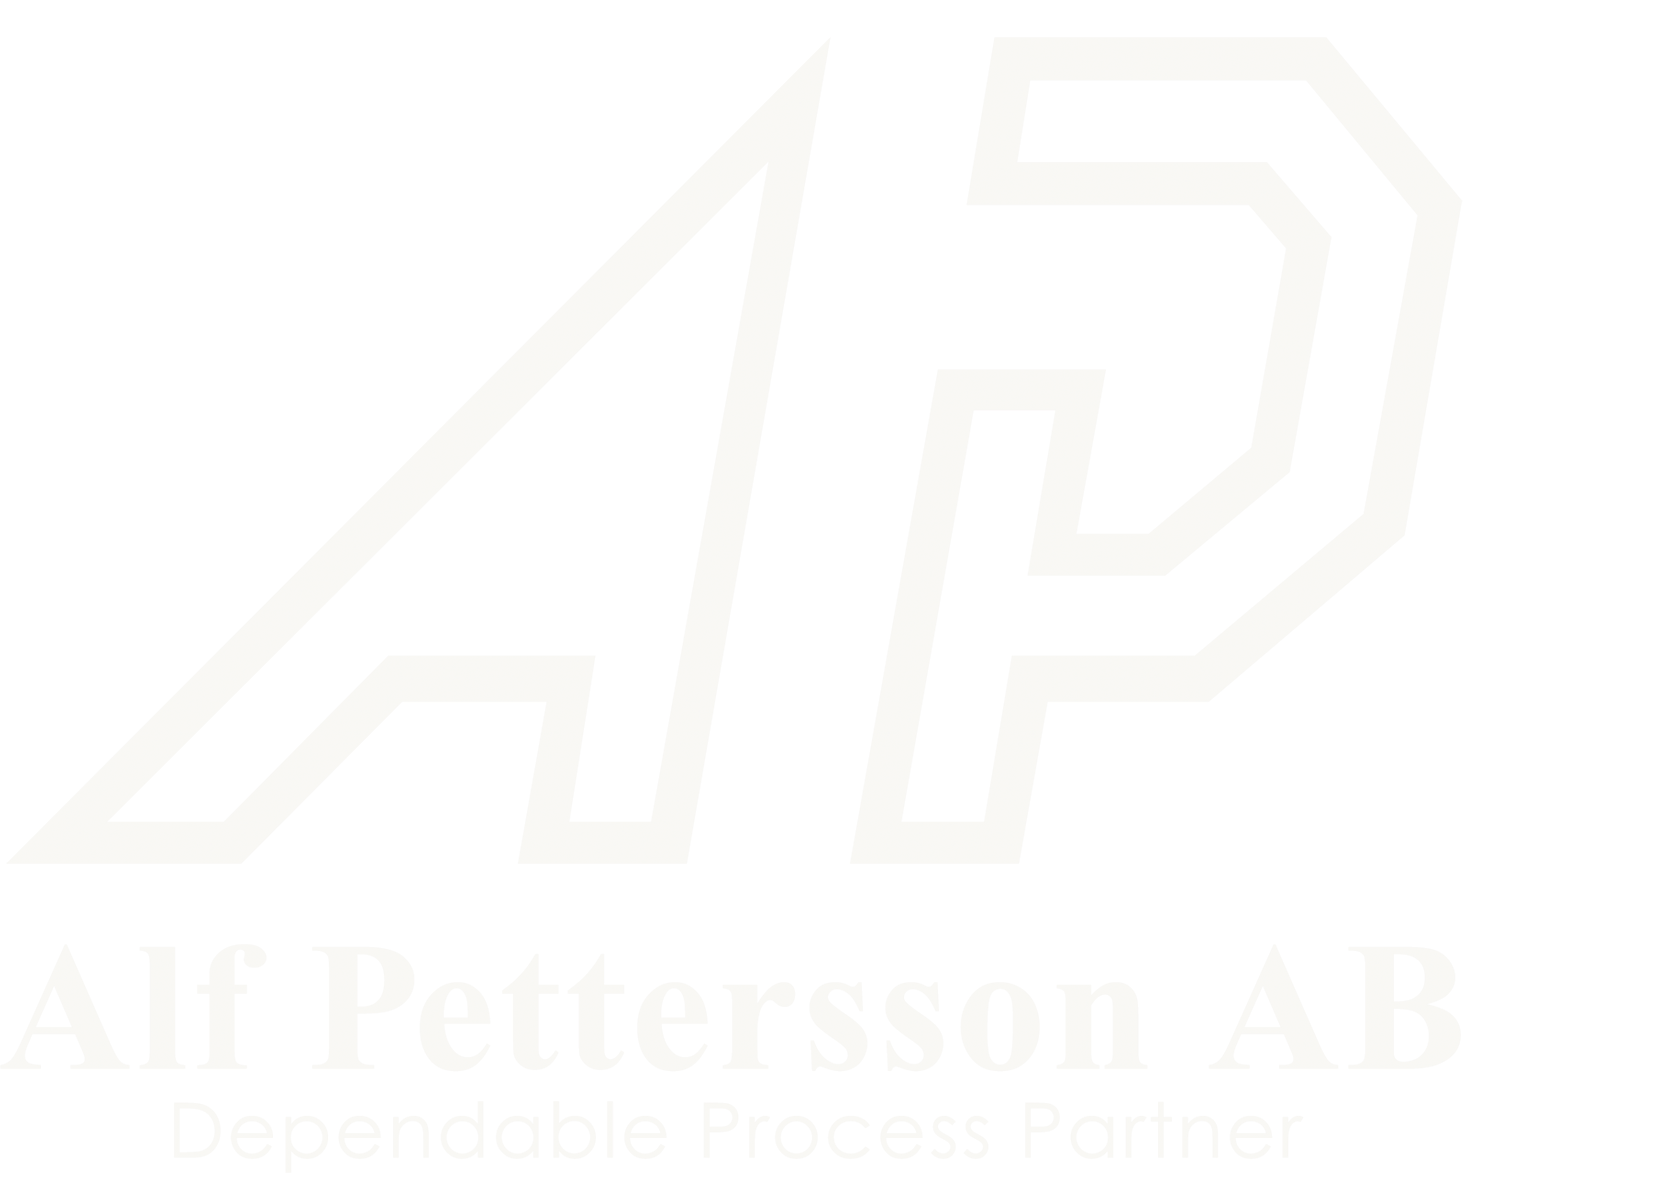 Alf Pettersson AB